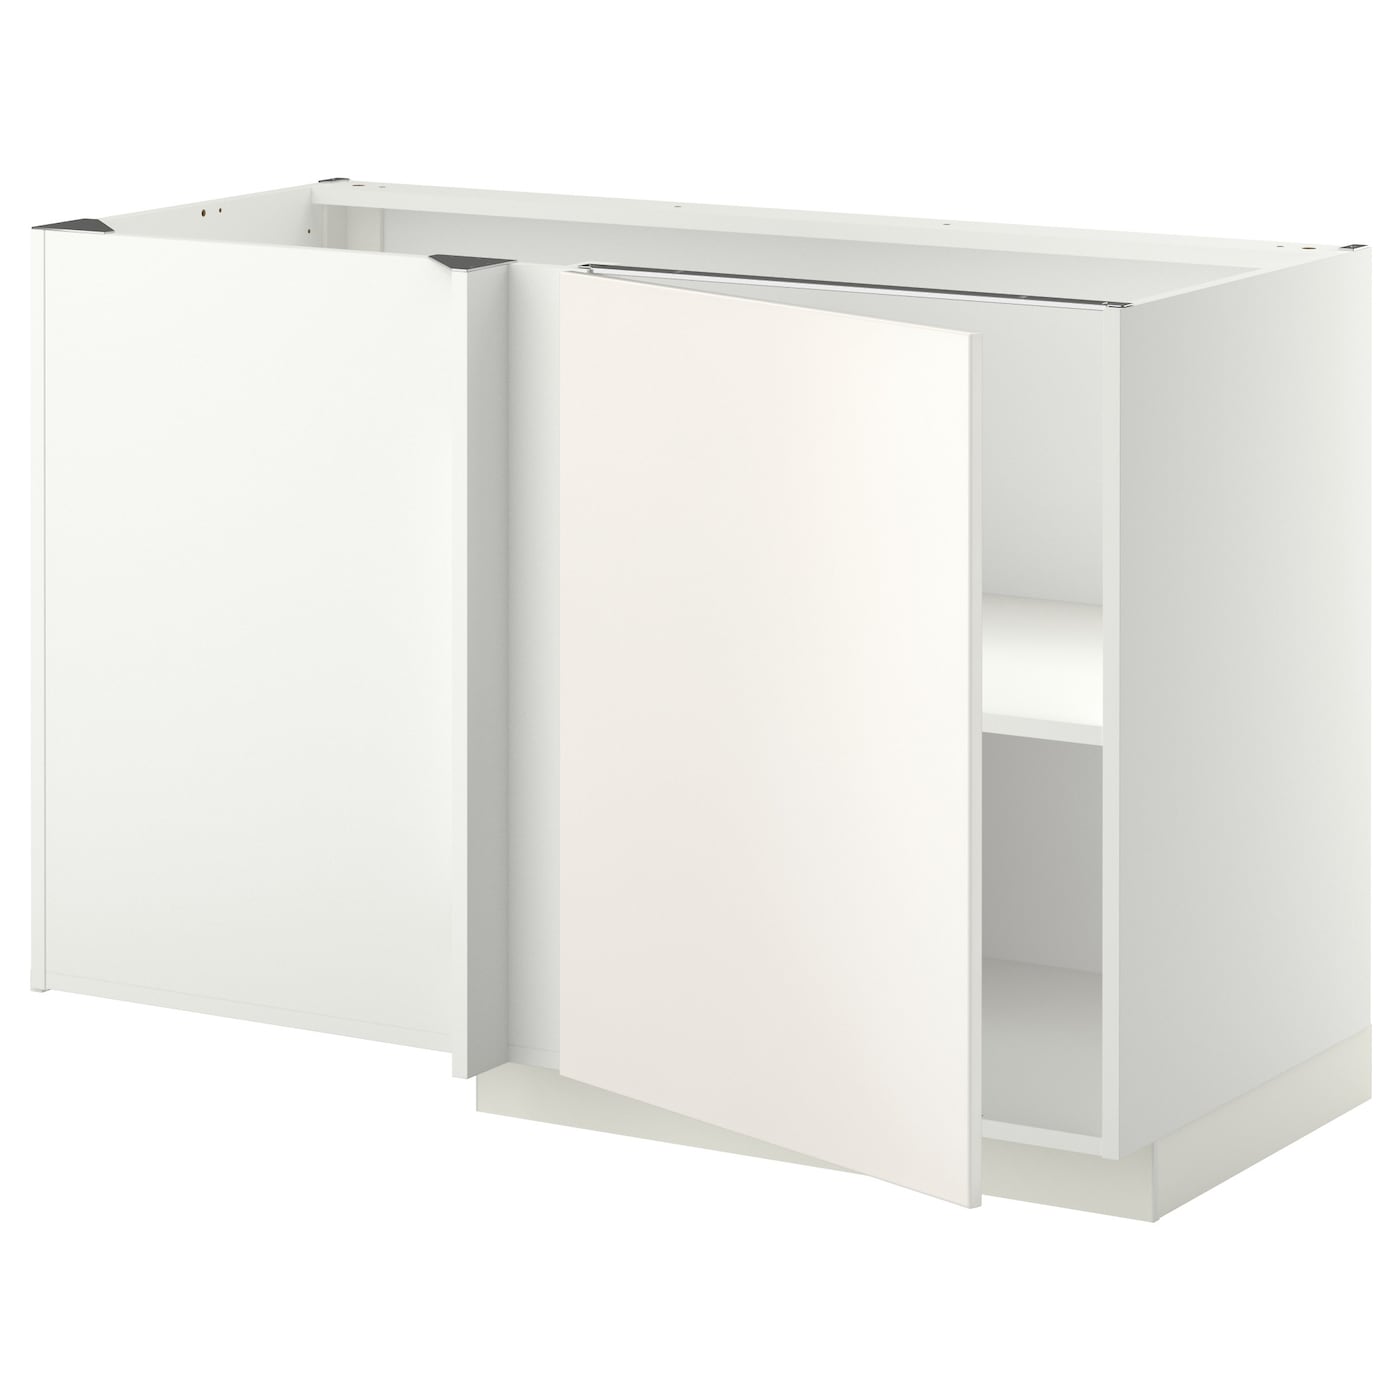 Напольный шкаф - METOD IKEA/ МЕТОД ИКЕА,  128х68 см, белый